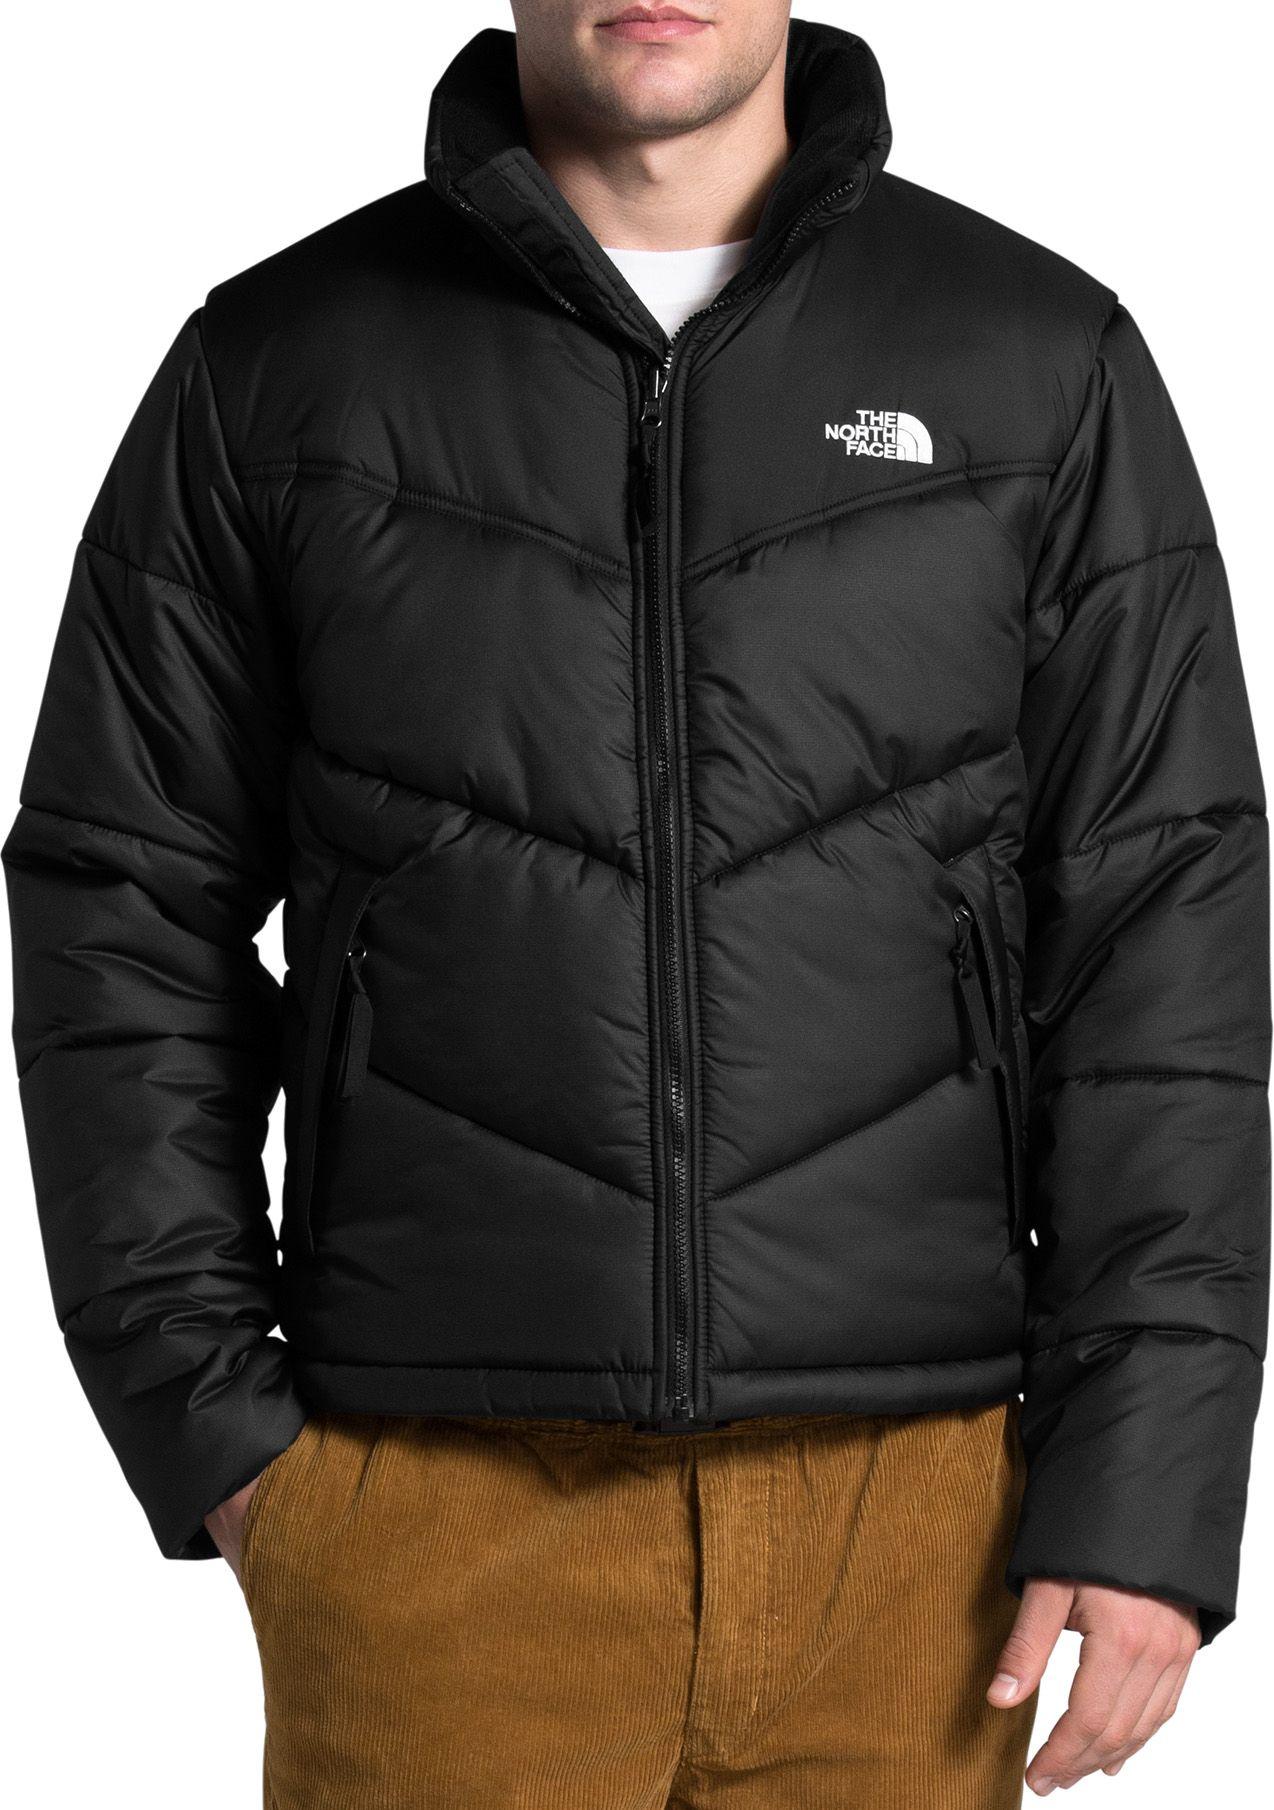 The North Face Saikuru Jacket in Black for Men - Lyst